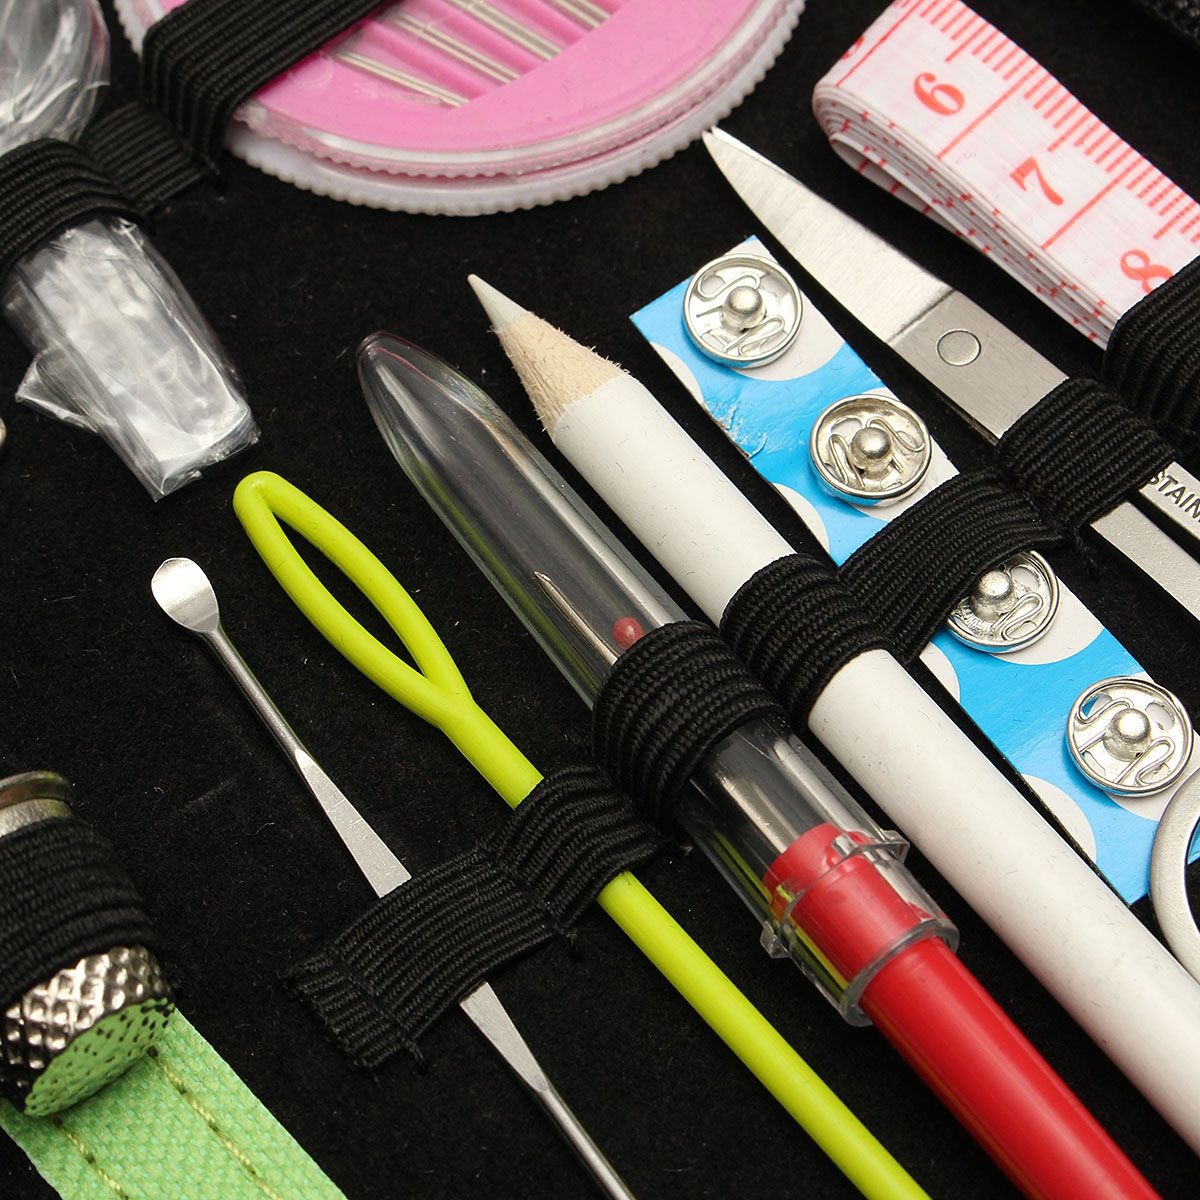 Travel-Sewing-Kit-Storage-Case-Thimble-Thread-Measure-Tape-Scissor-1733610